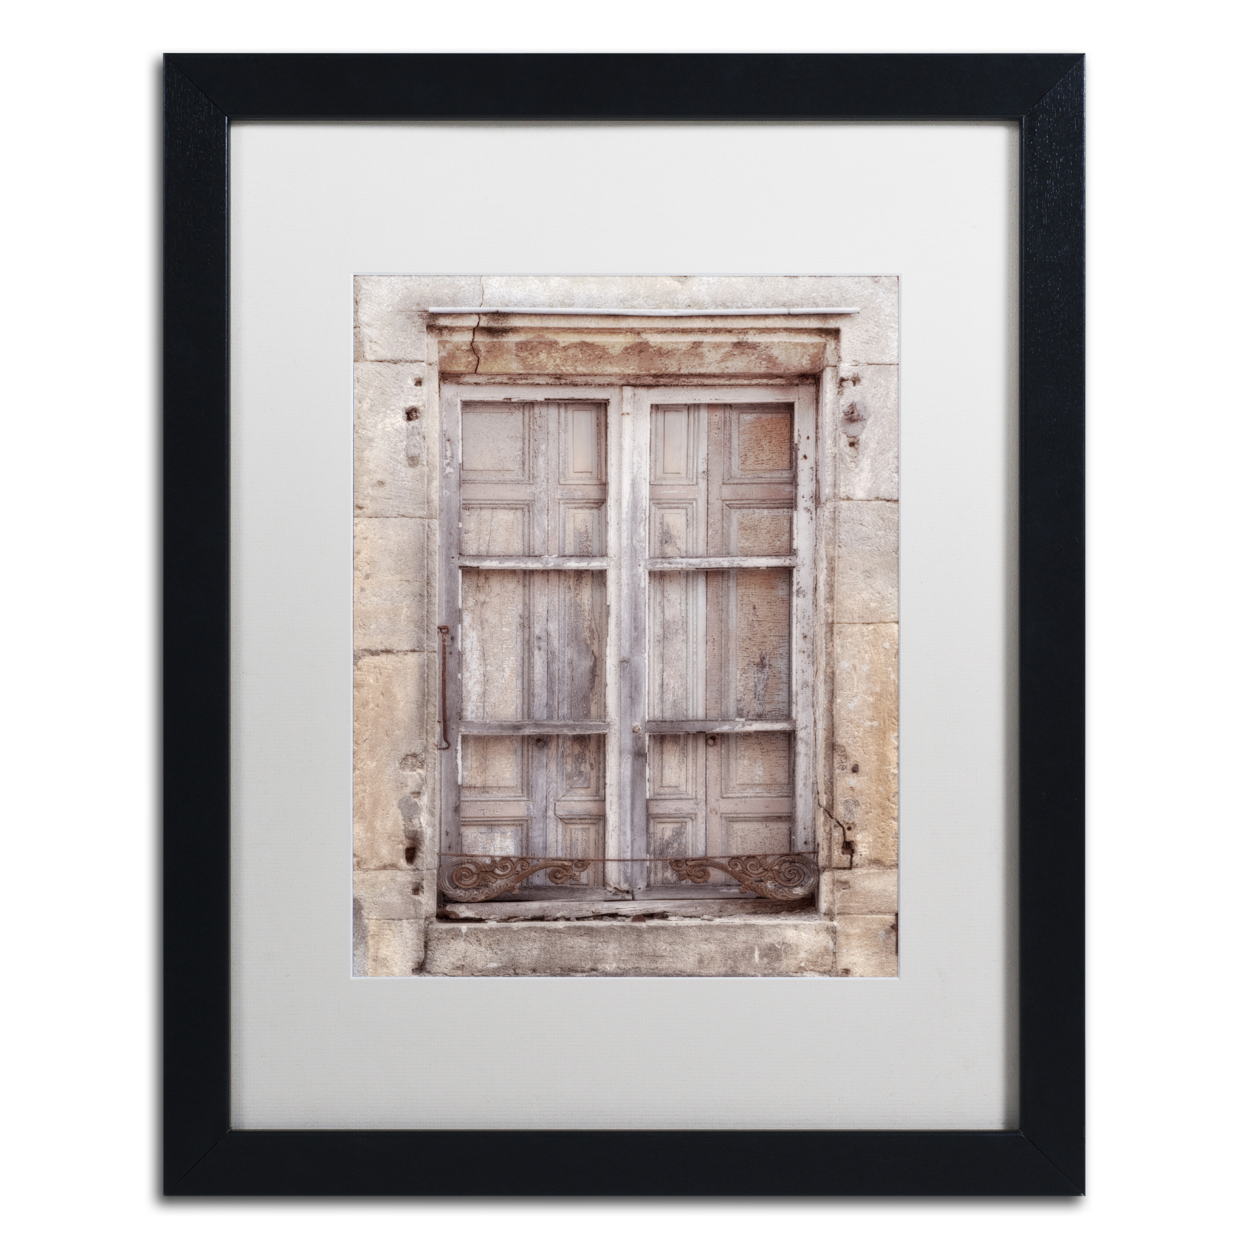 Cora Niele 'French Window I' Black Wooden Framed Art 18 X 22 Inches